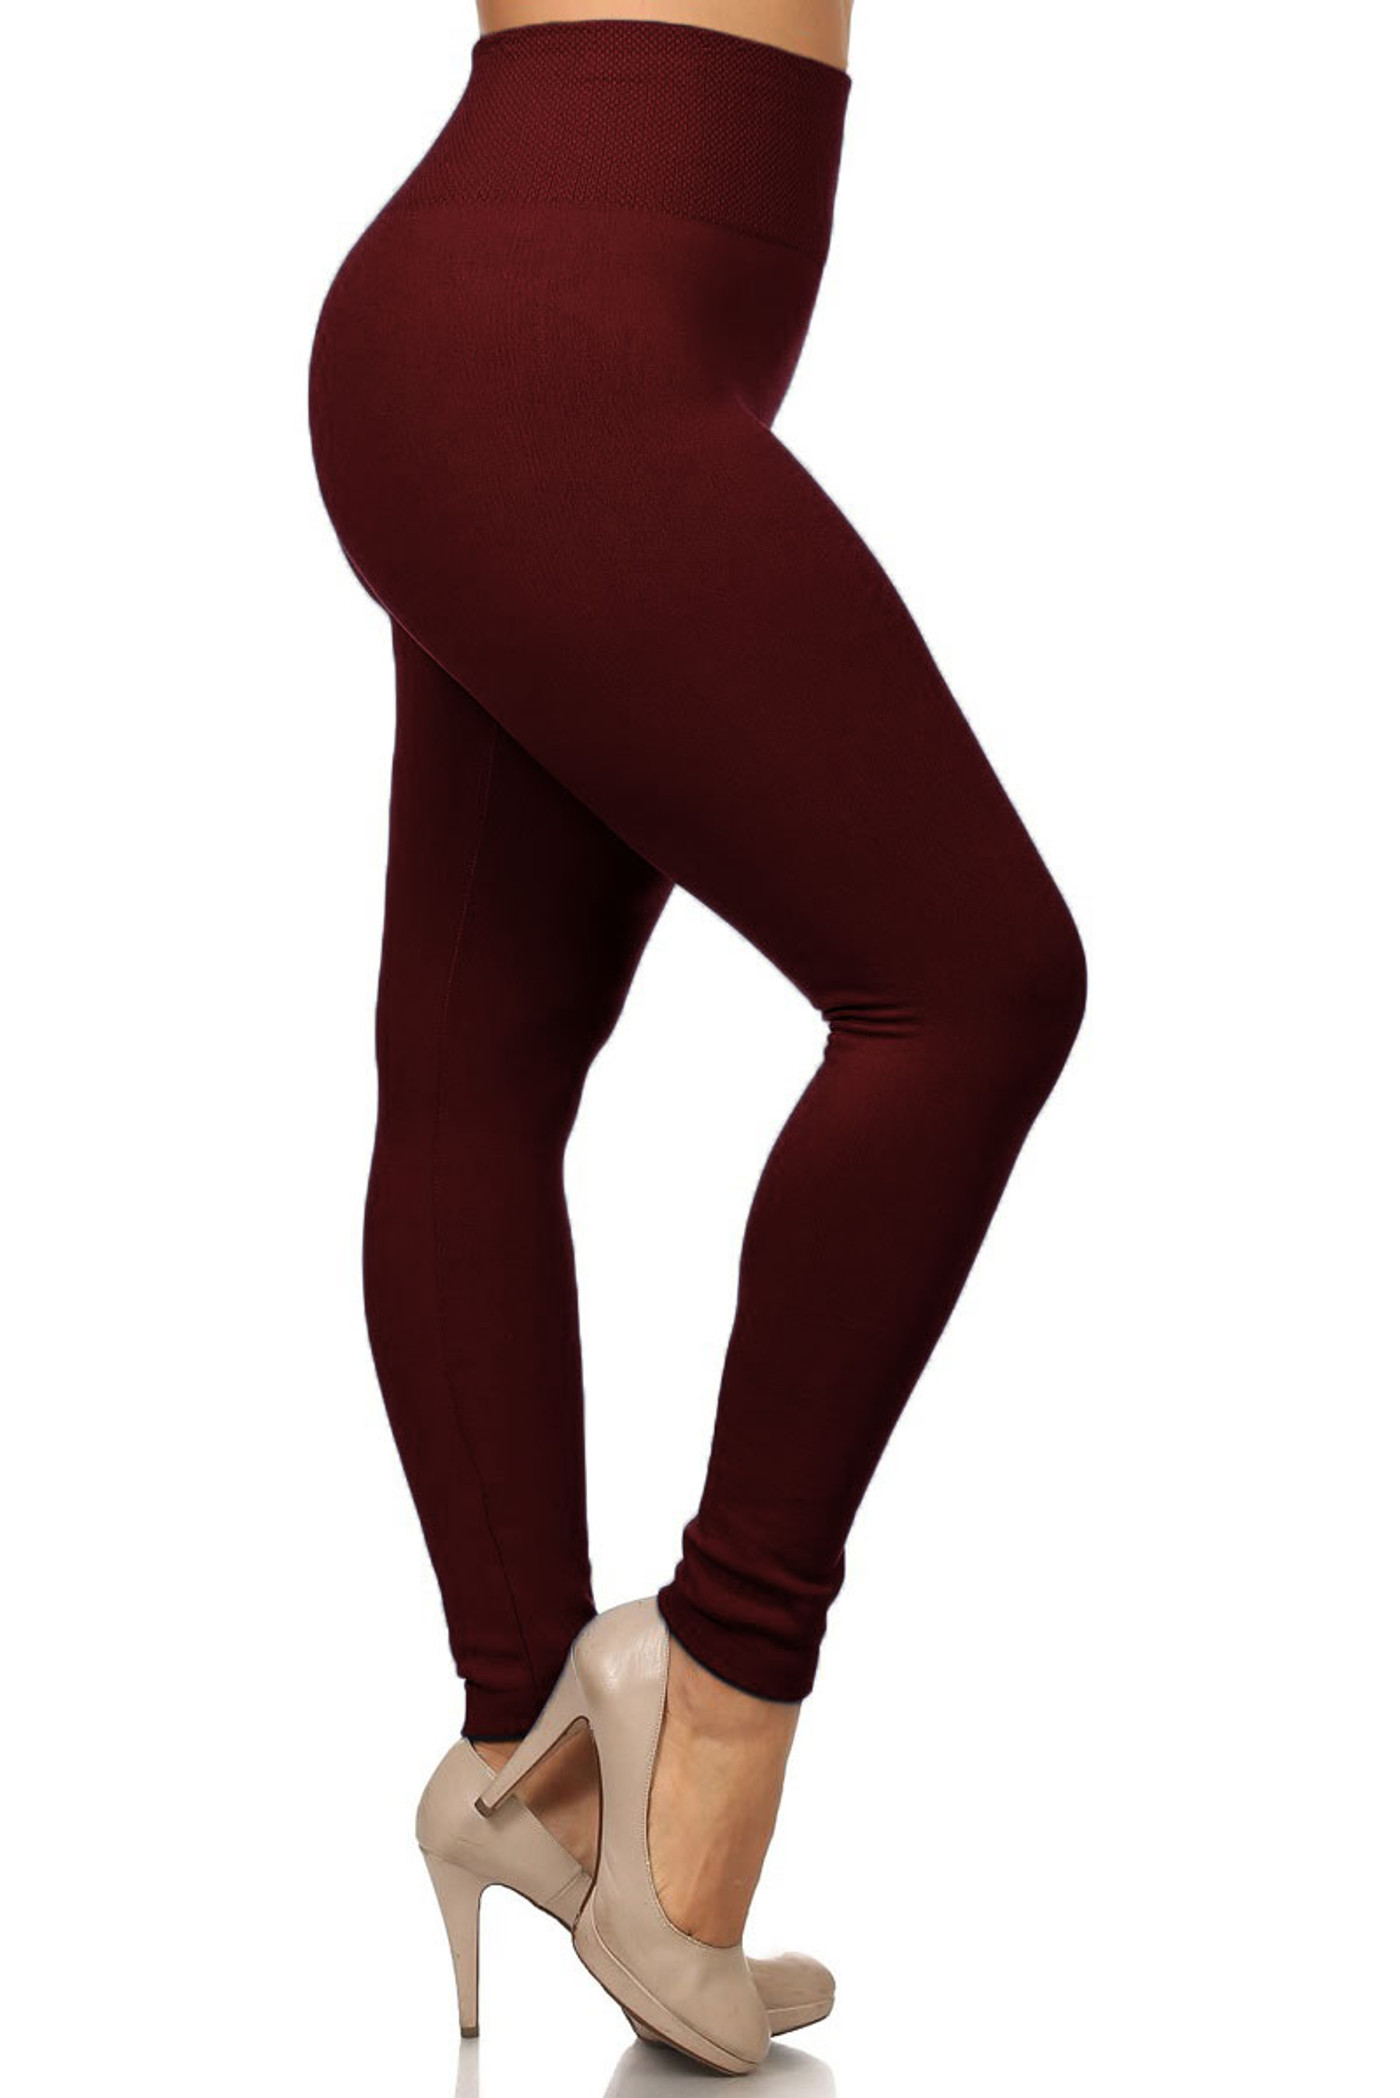 Large Size High Waist Leggings Women Solid Color Fleece Lined 2021